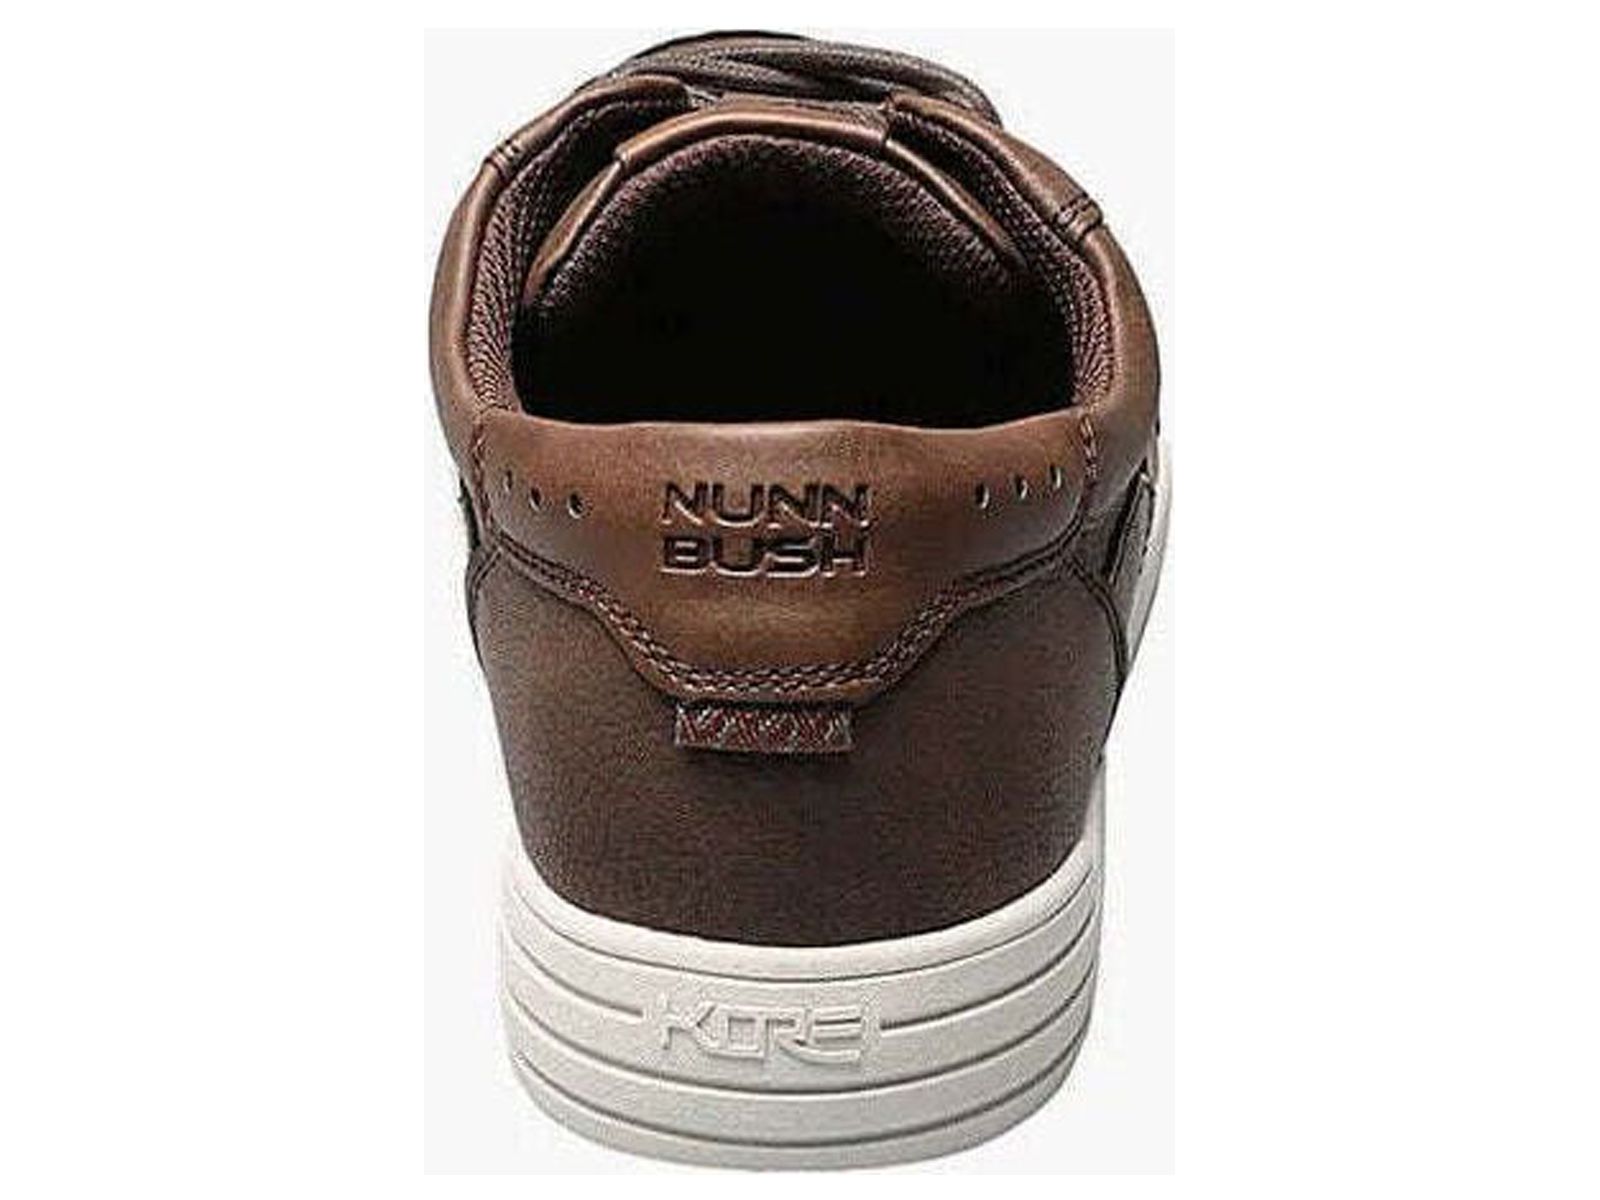 Nunn Bush KORE City Walk Lace To Toe Oxford Walking Sneaker Brown 84819-200 - image 2 of 9